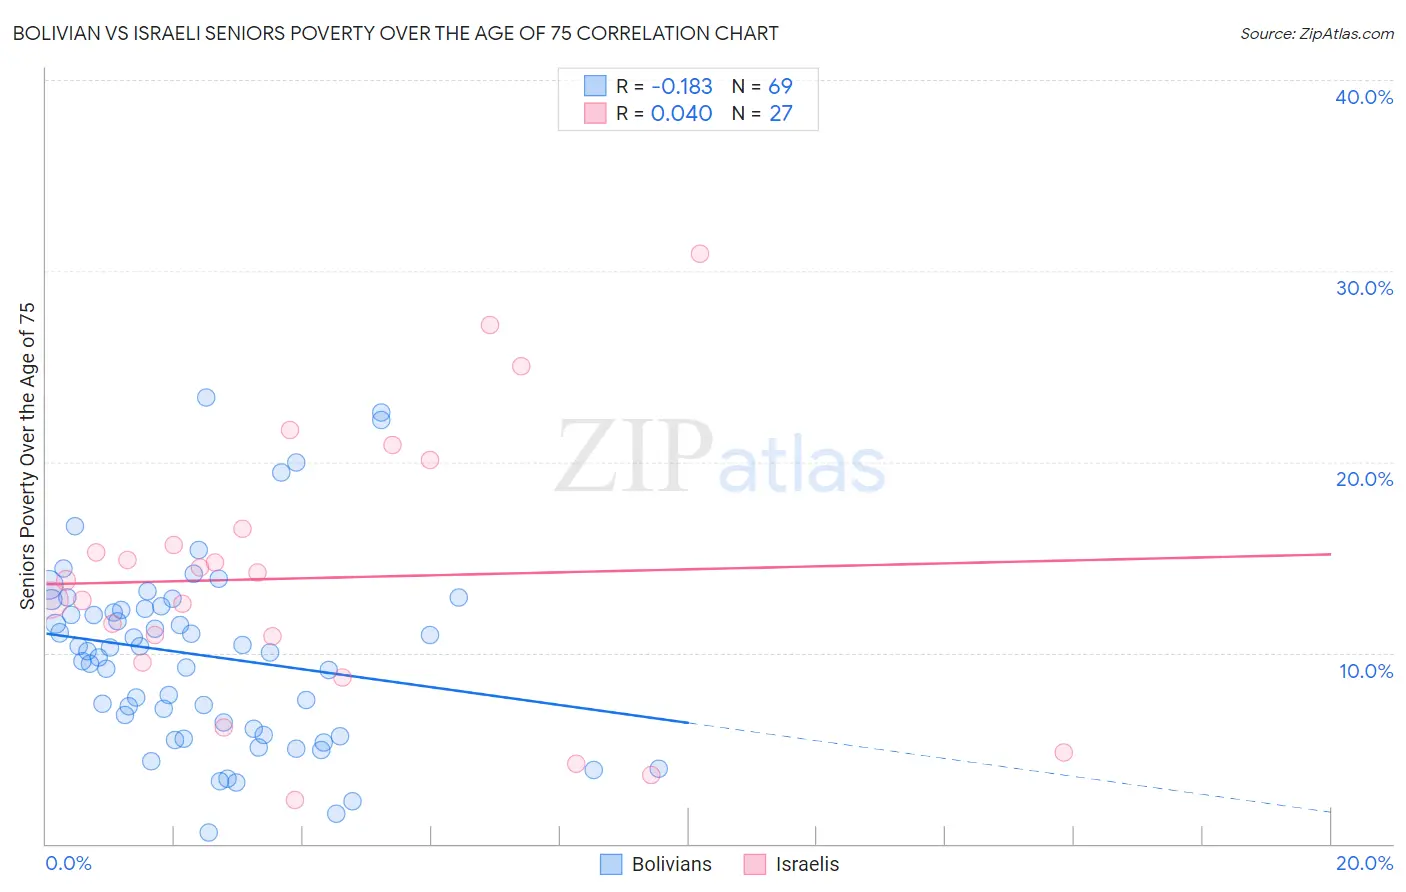 Bolivian vs Israeli Seniors Poverty Over the Age of 75